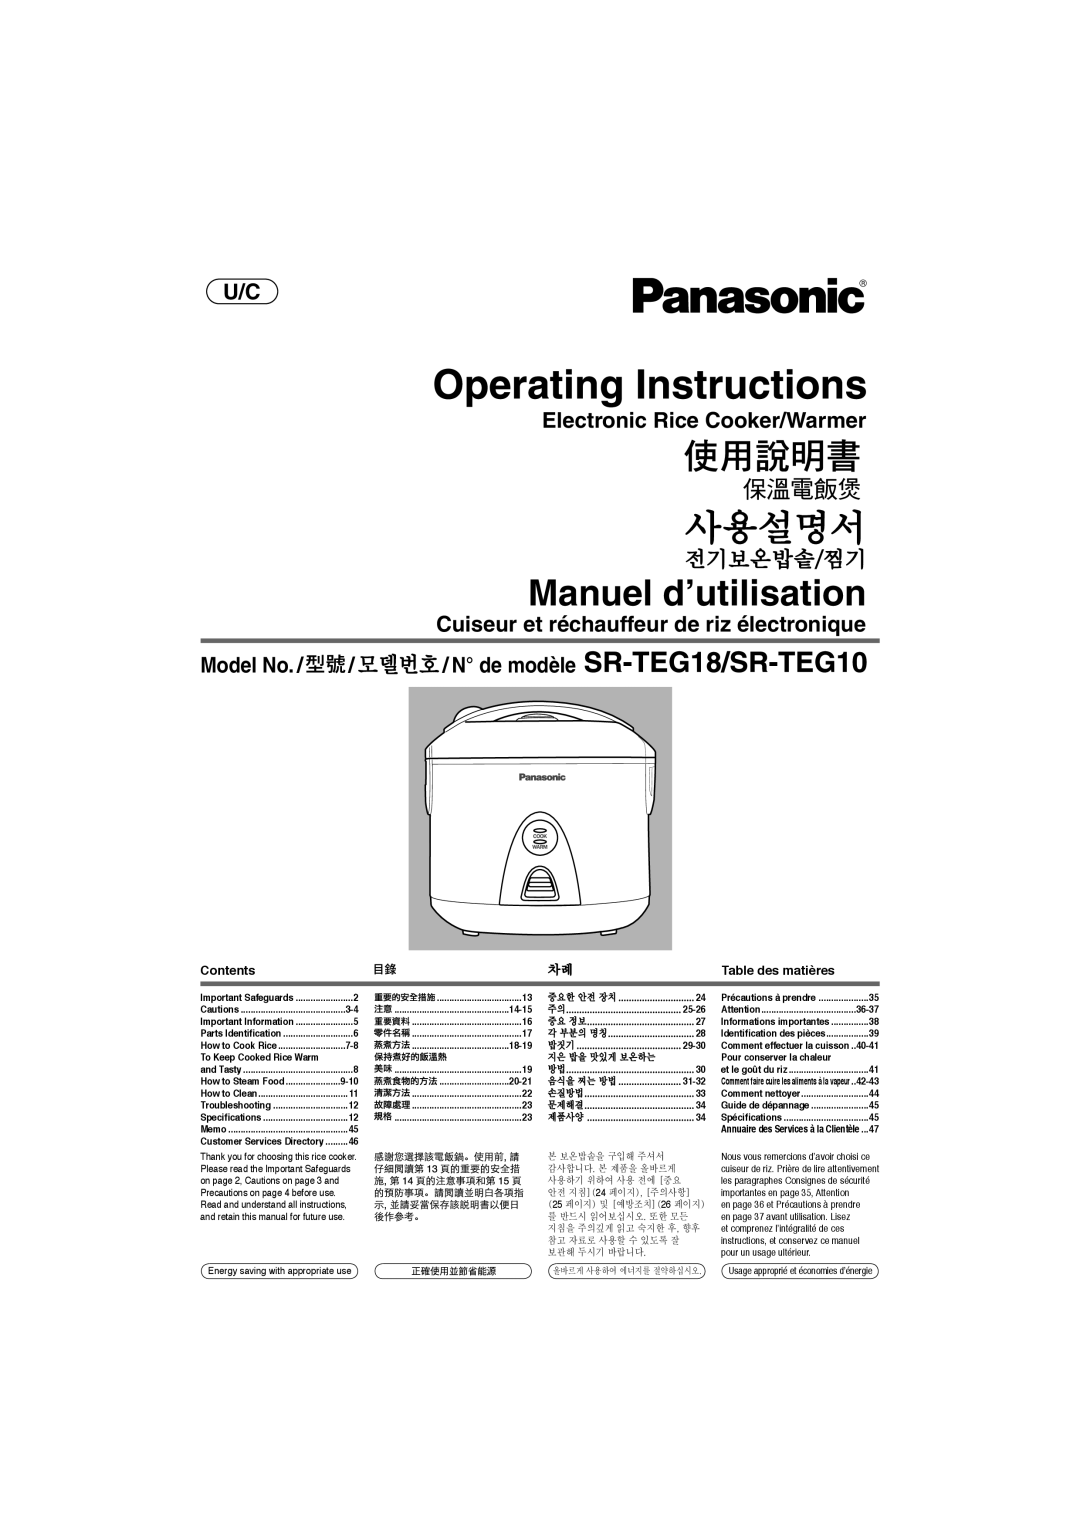 Panasonic SR-TEG18 manuel dutilisation 사용설명서, Manuel d’utilisation, U/C Electronic Rice Cooker/Warmer, 전기보온밥솥/찜기, Contents 